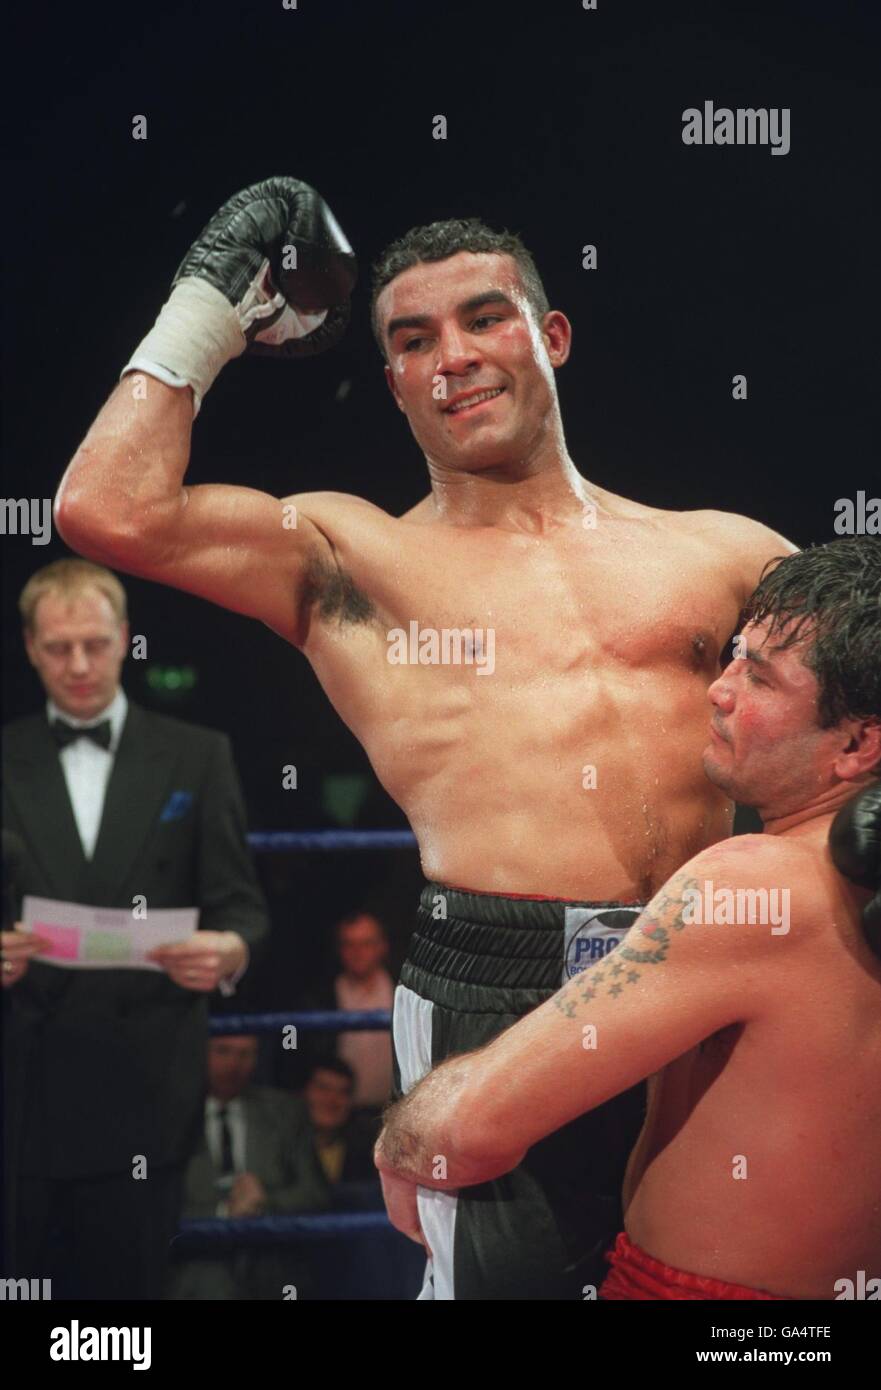 Boxing - Super Middleweight Championship Robin v Julio Cesar Vasquez. Robin celebrates at the